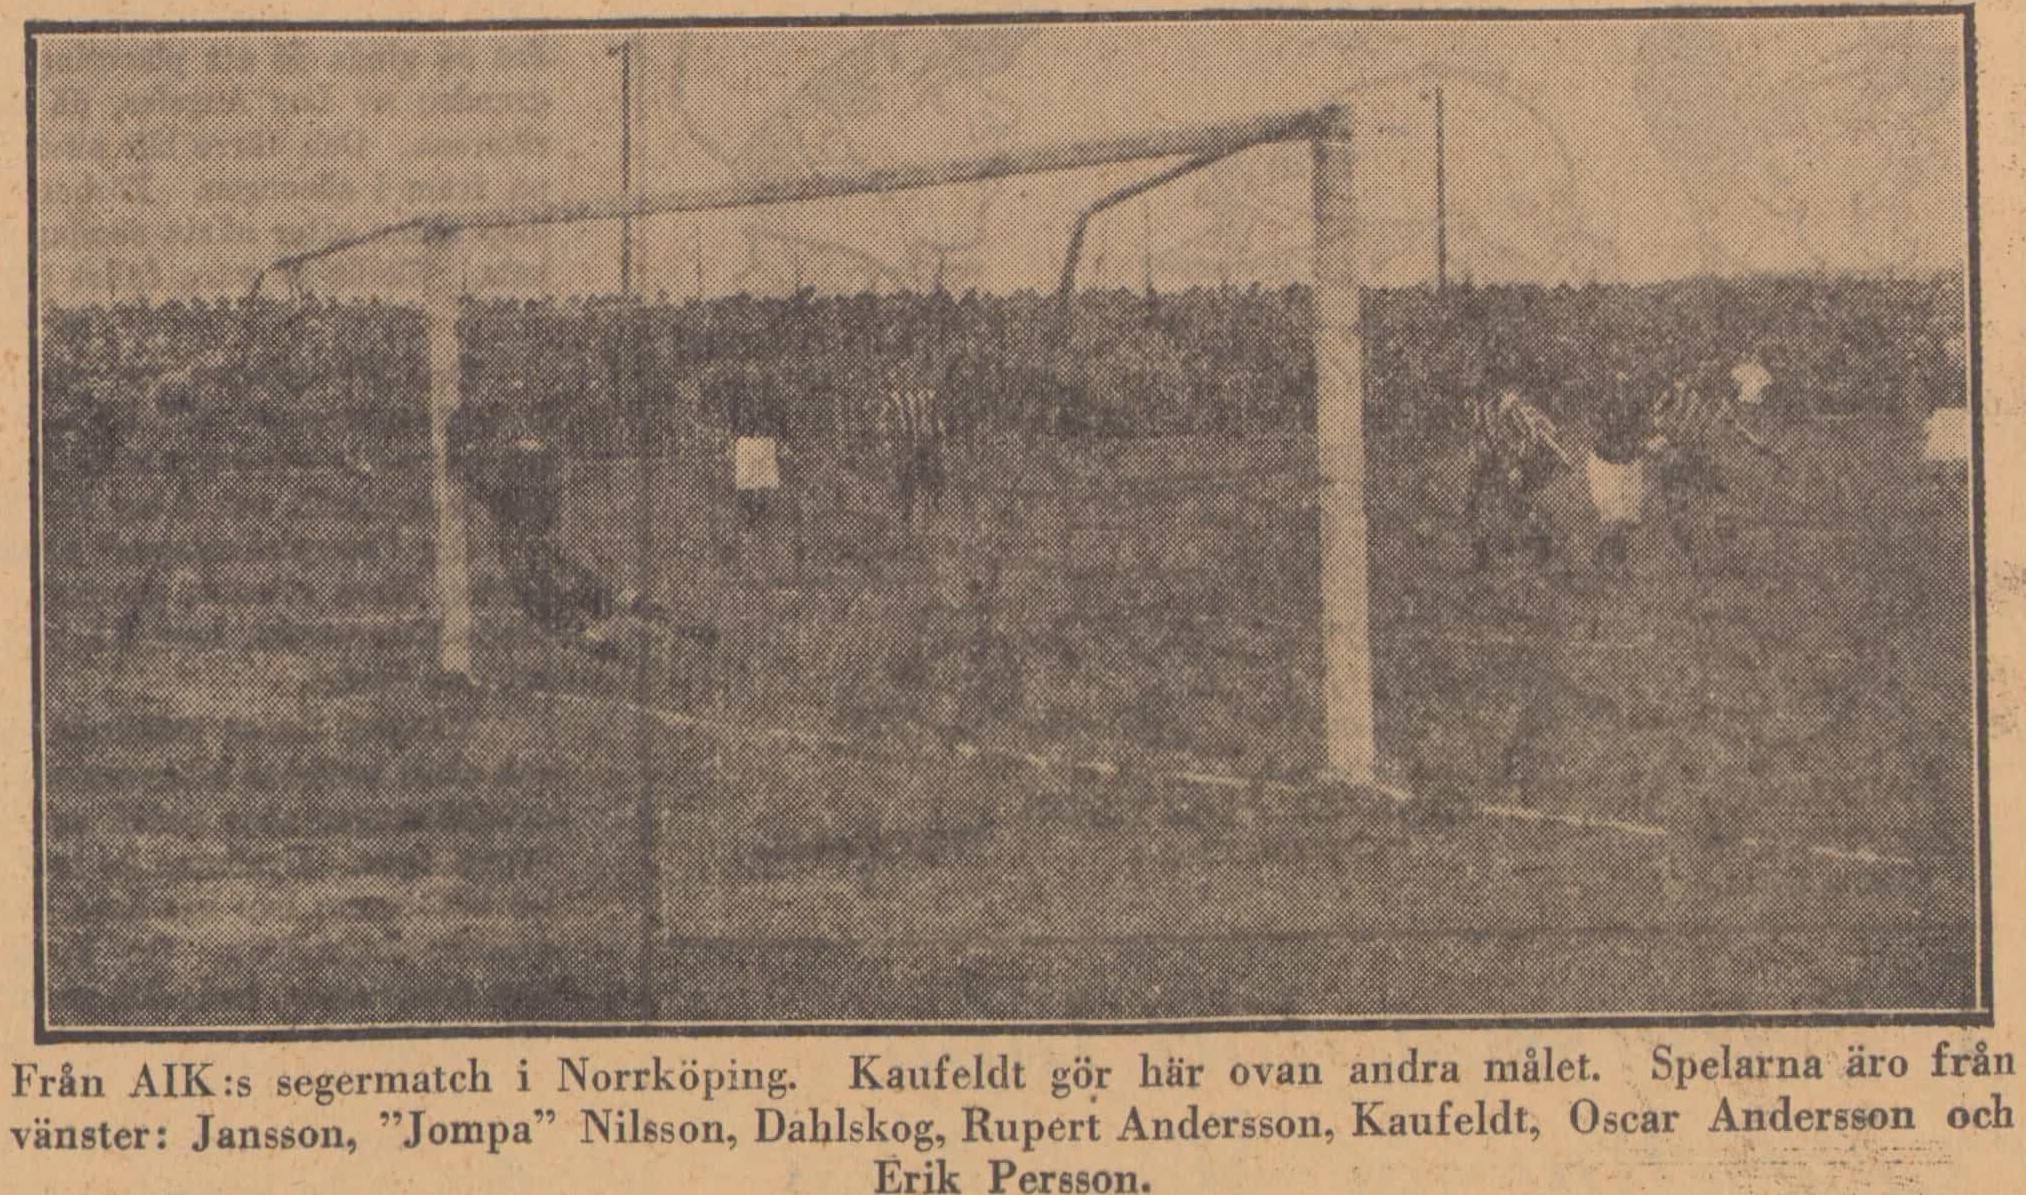 Sunday 3 May 1931, kl 13:00  IK Sleipner - AIK 2-5 (1-2)  Idrottsparken, Norrköping